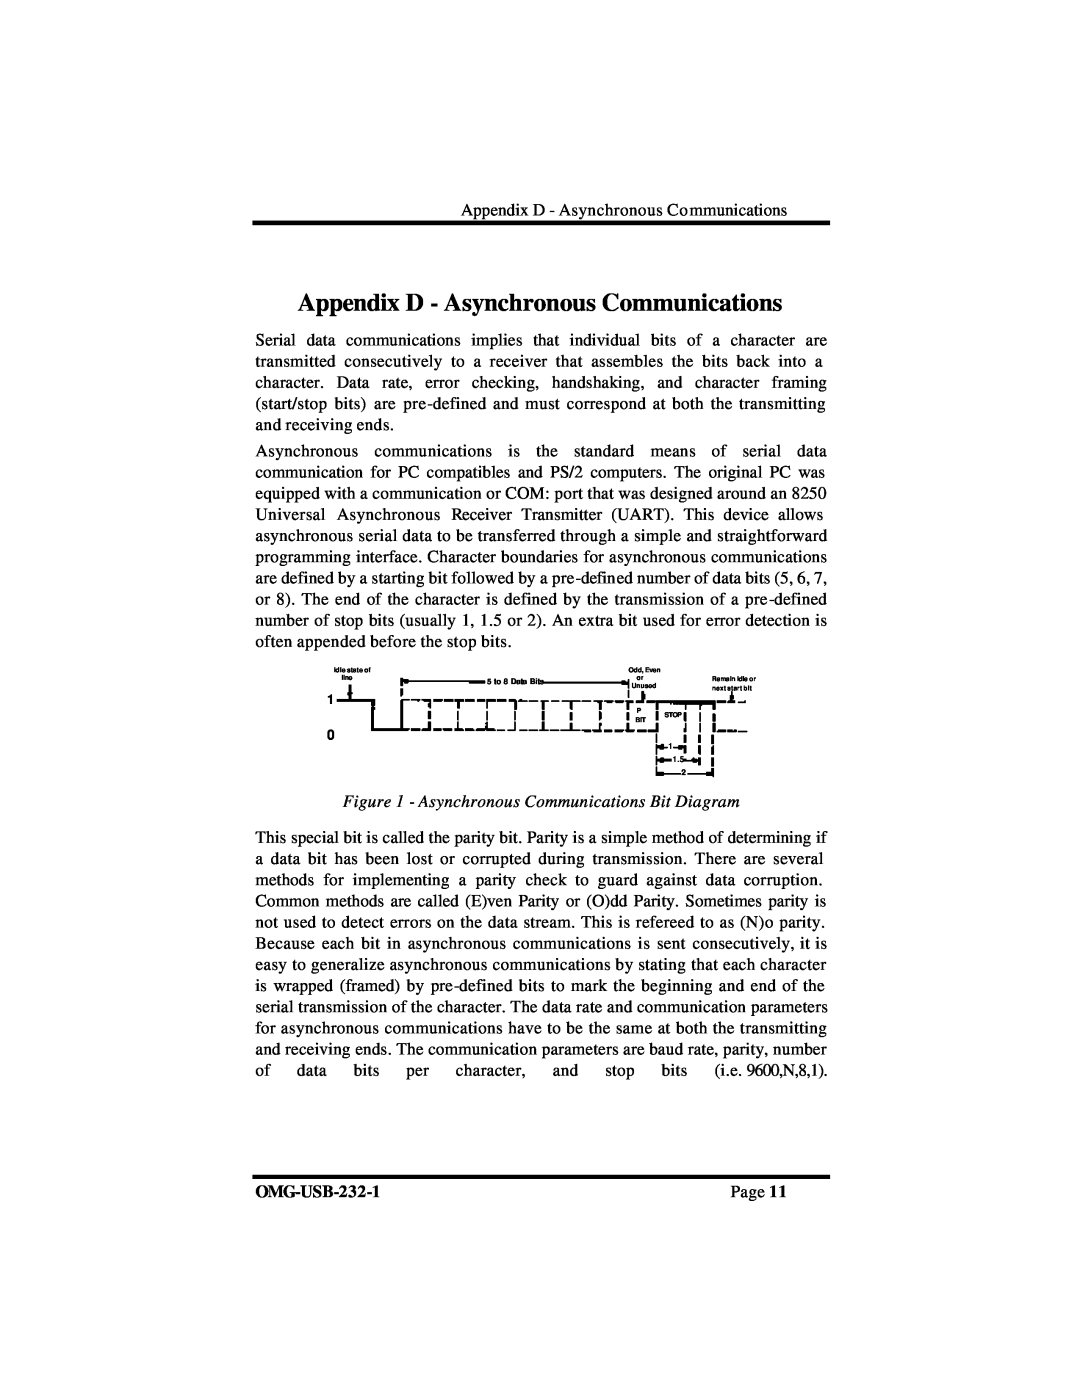 Omega RS-232 manual Appendix D - Asynchronous Communications, Asynchronous Communications Bit Diagram, OMG-USB-232-1, Page 